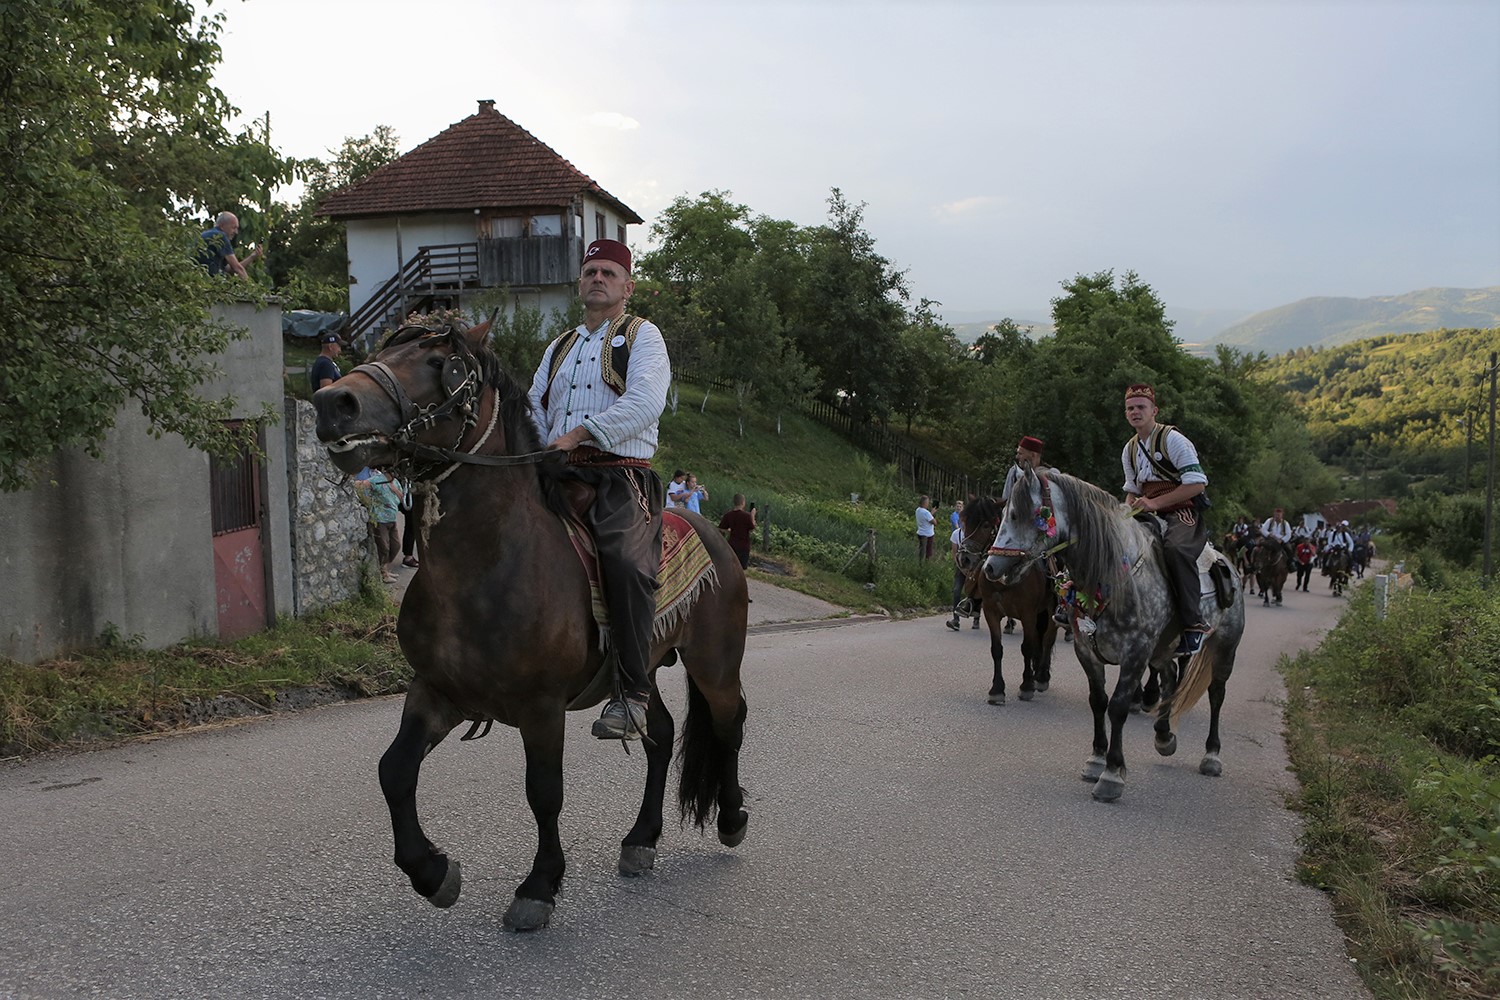 Men on horseback ride up a country road near Prusac, Bosnia and Herzegovina (photo: Konstantin Novakovic)